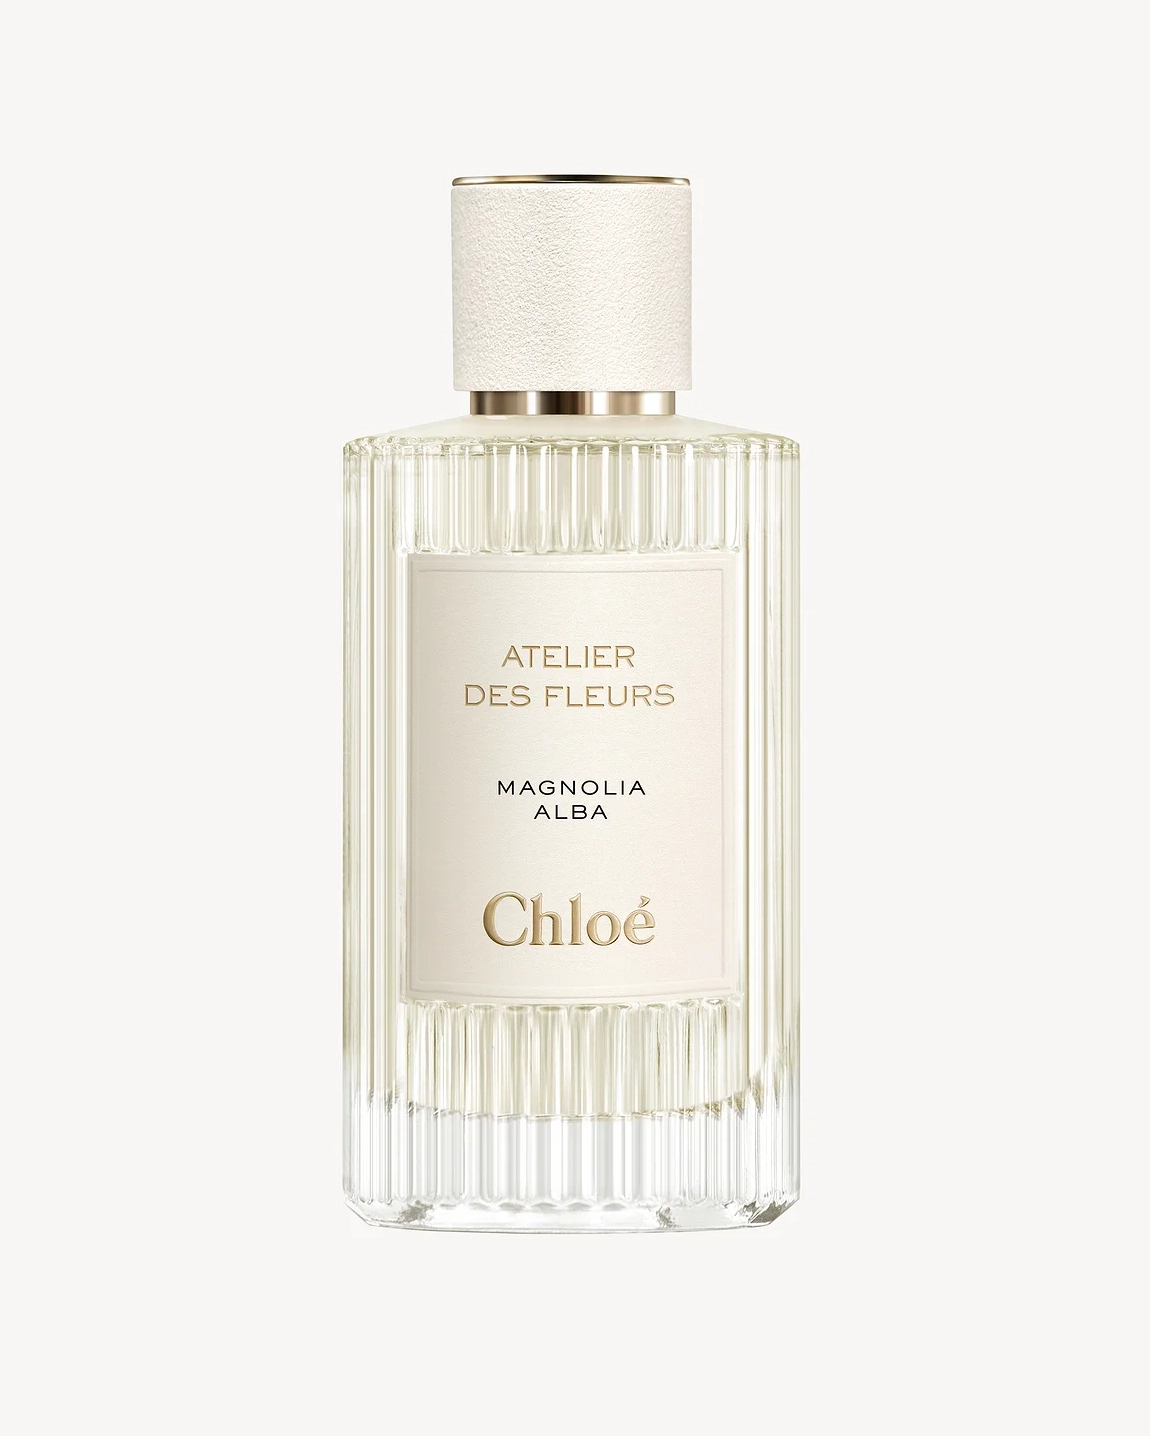 Frasco de vidrio acanalado de Atelier des Fleurs Magnolia Alba de Chloé con detalles en marfil y oro, ideal como perfume para boda